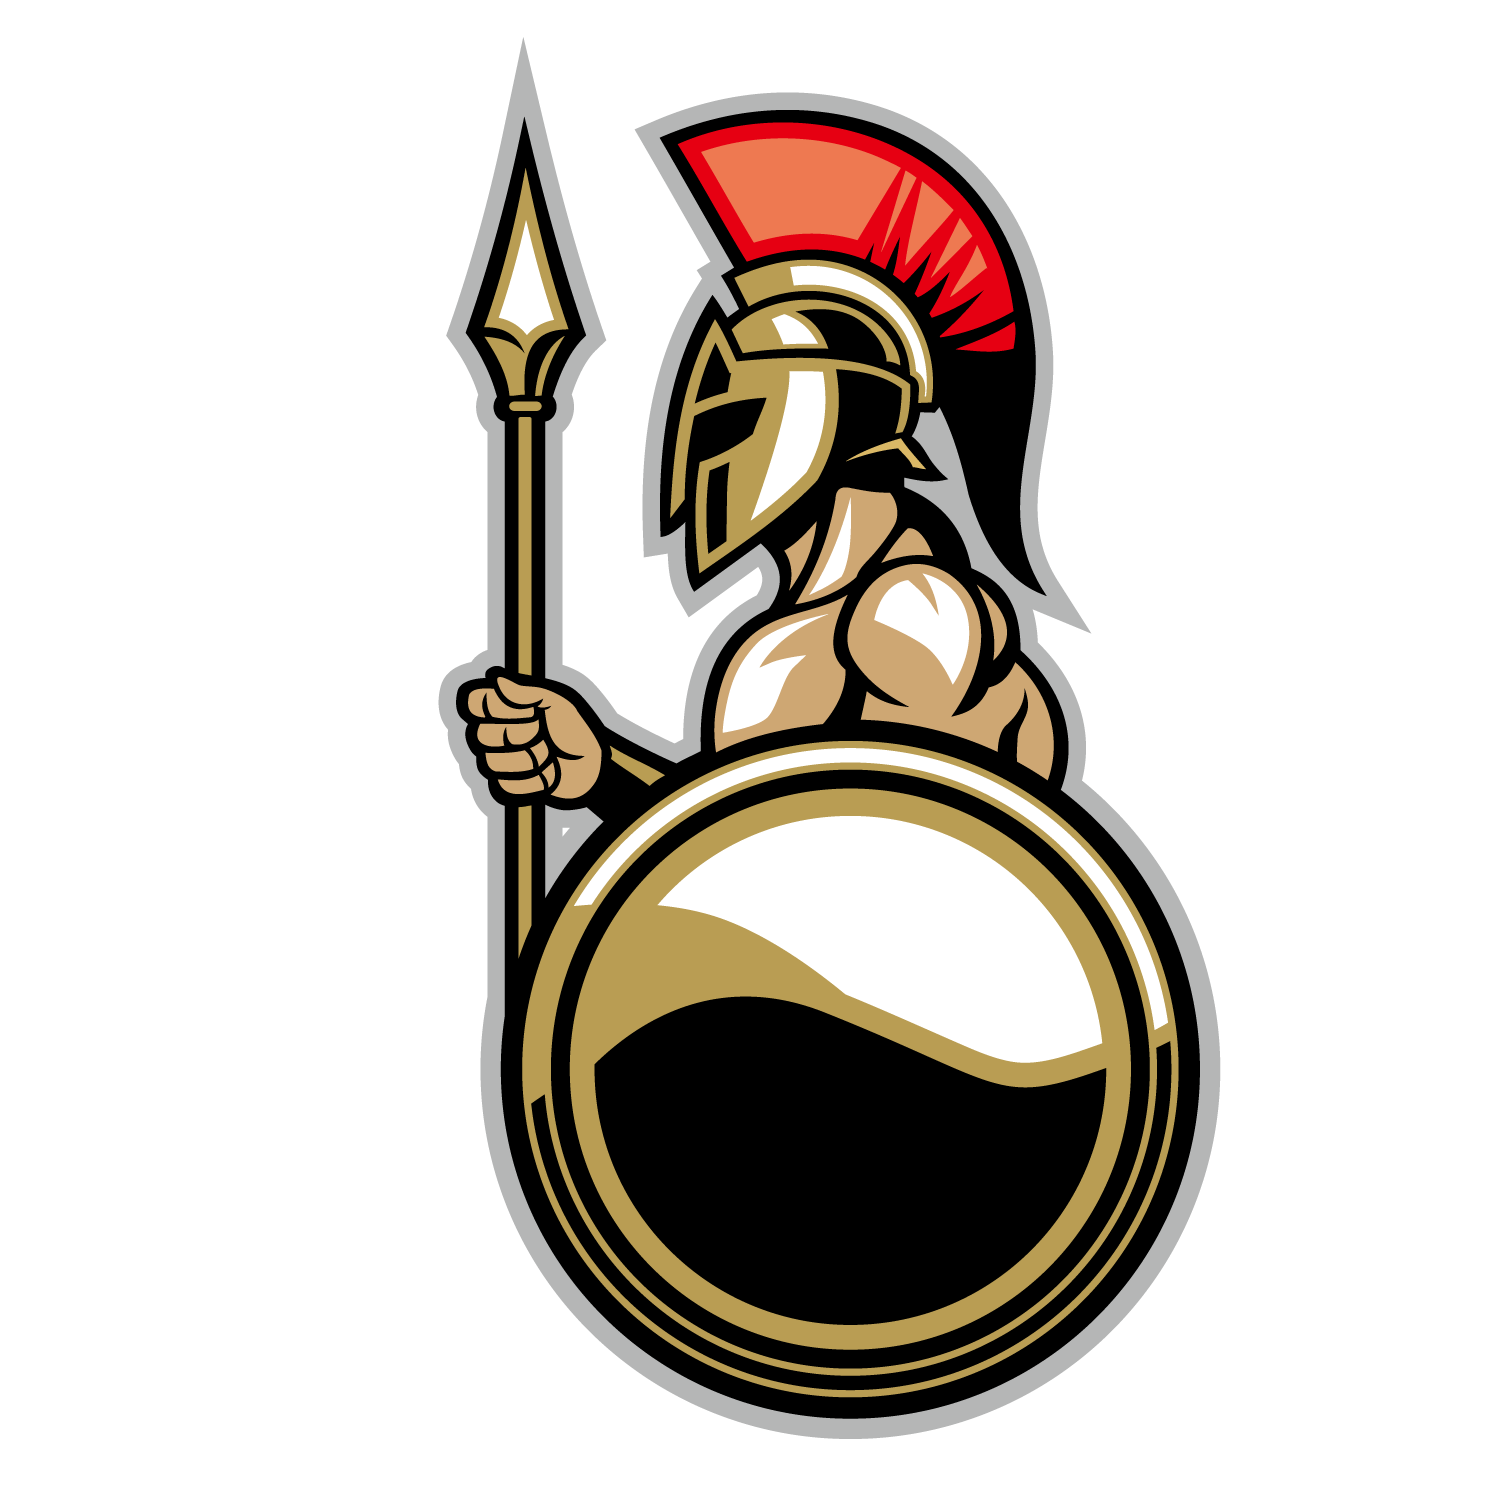 Download Warrior Emblem Army Symbol Roman Spartan HQ PNG Image in ...